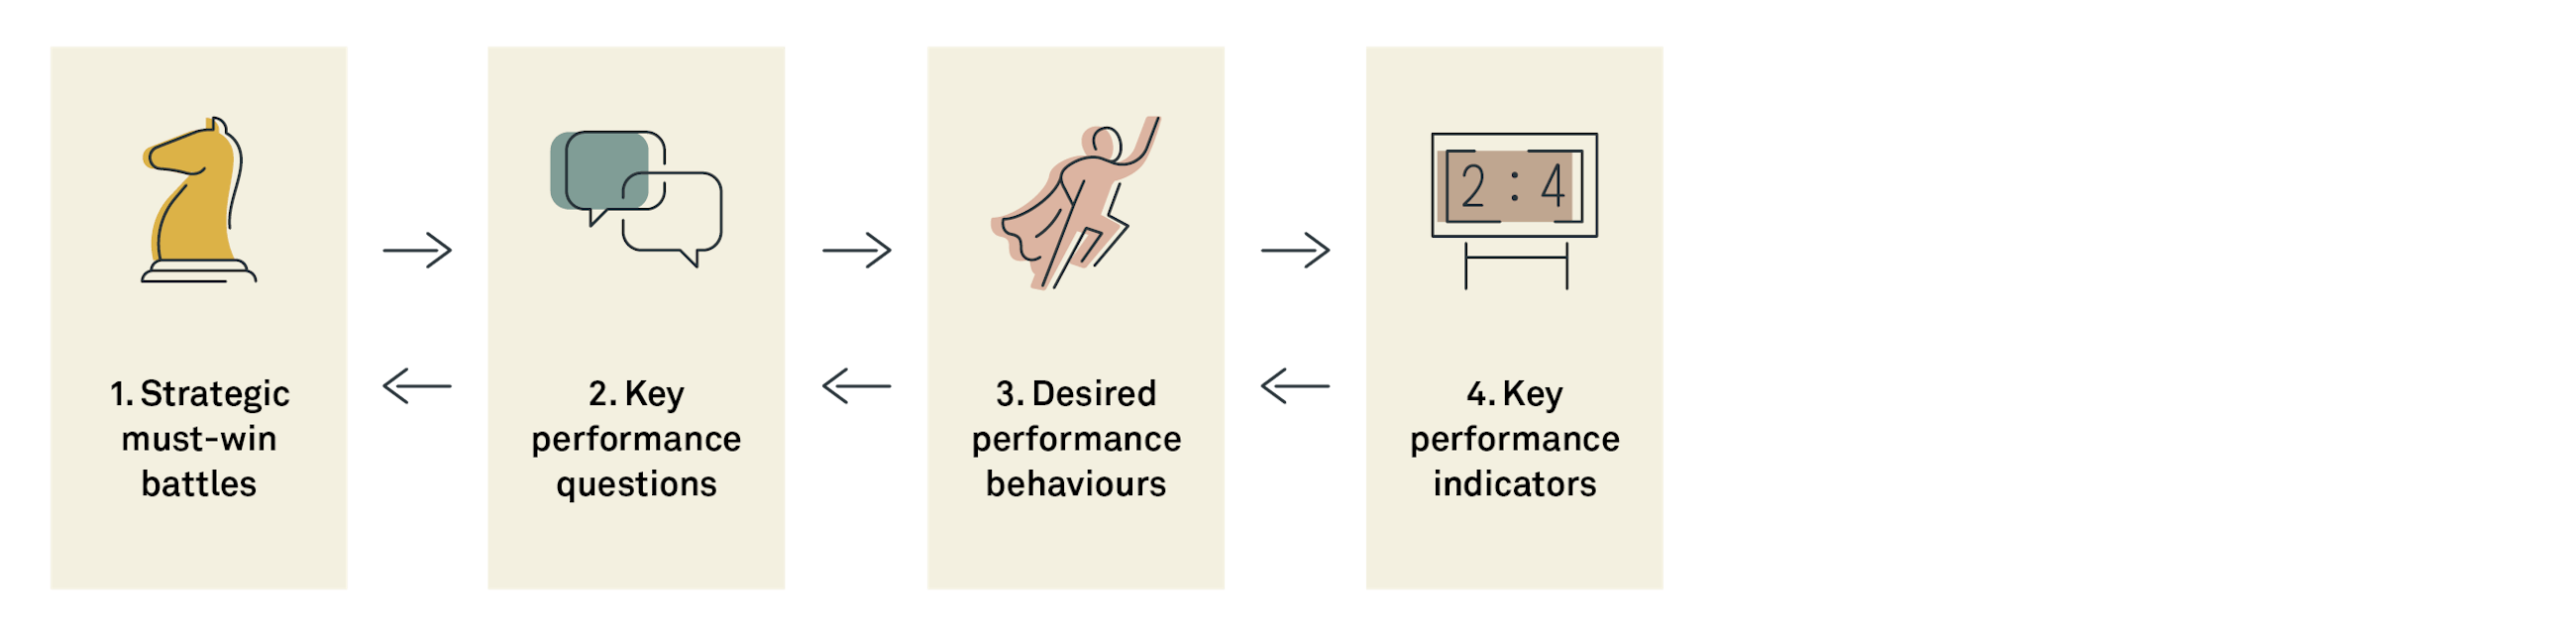 200602 fig behavioural performance metrics jw